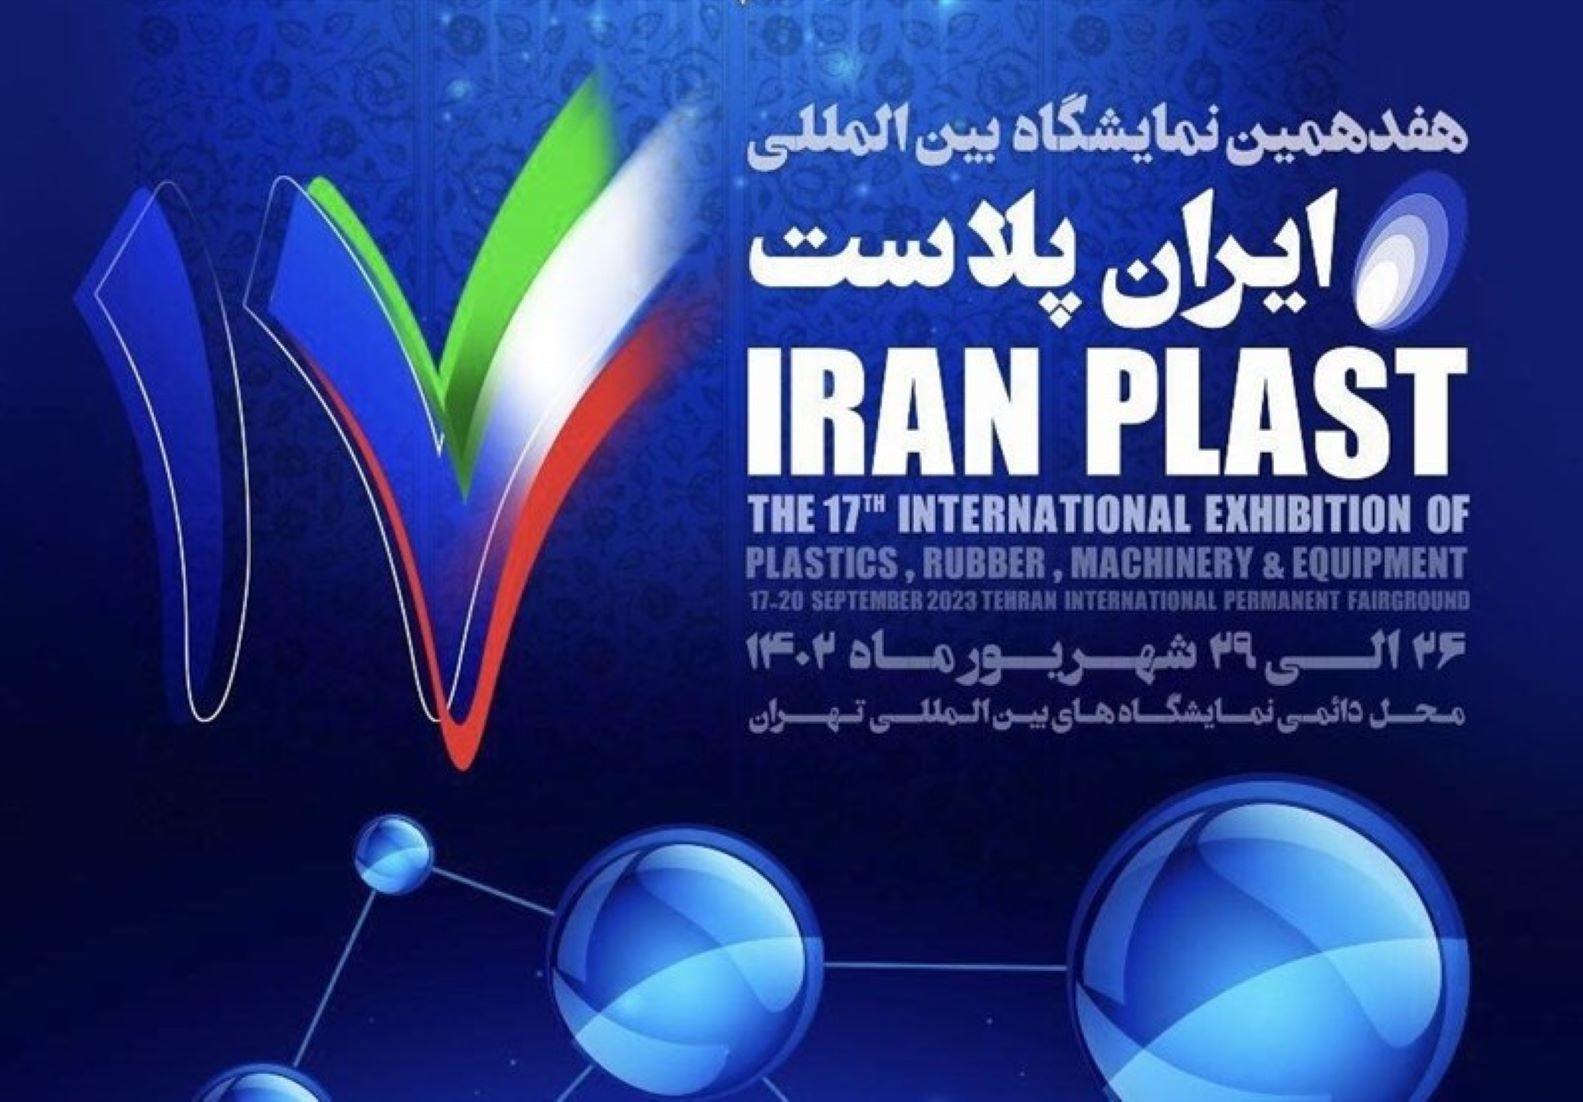 Int’l Plastics, Rubber, Machinery Exhibition Kicked Off In Iran